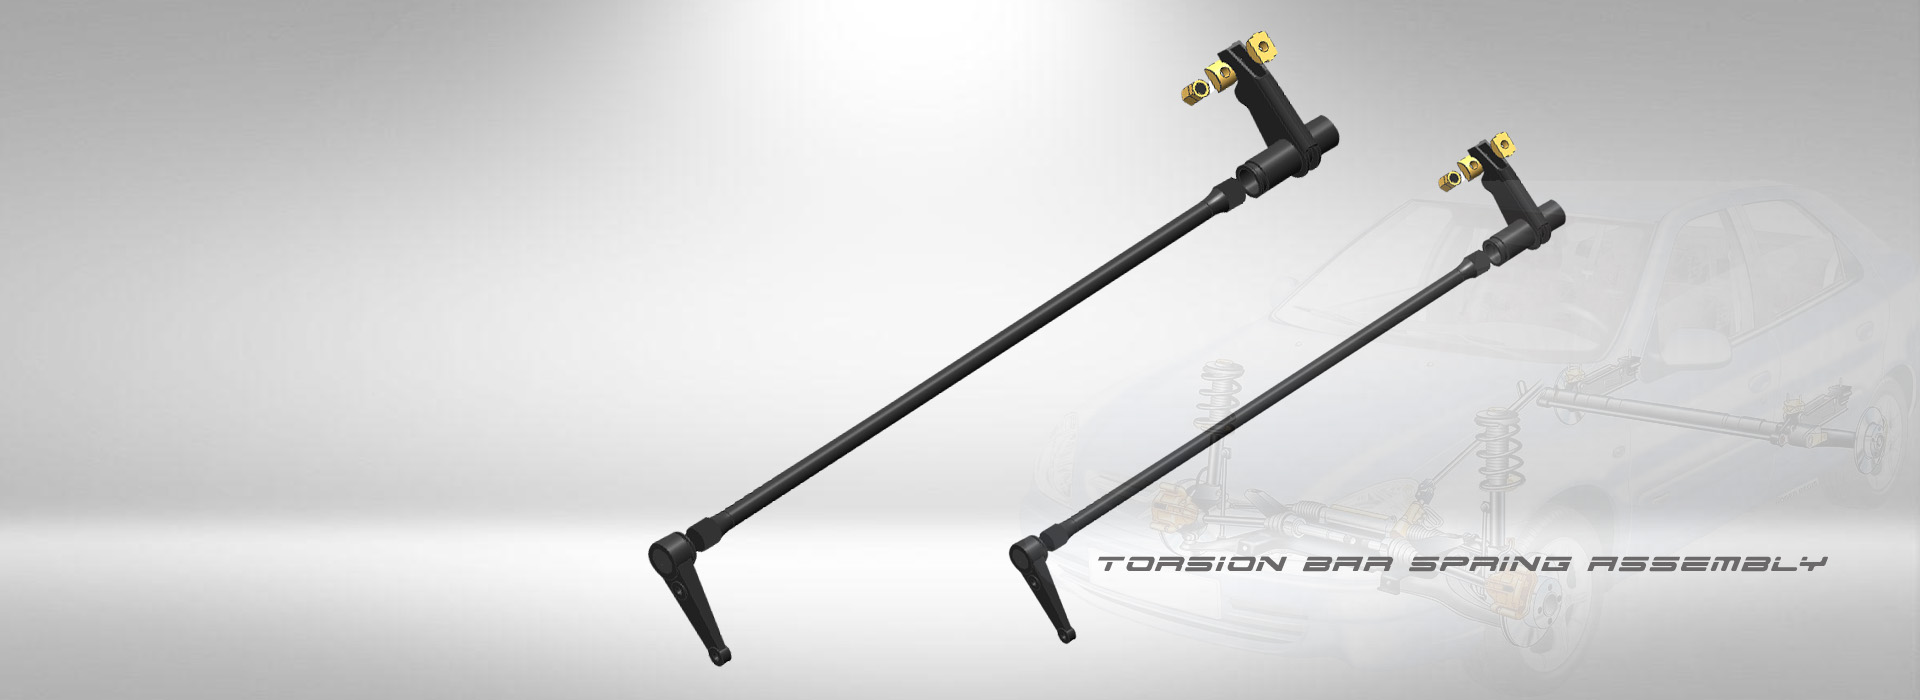 Torsion bar suspension manufacturers - Zhejiang masite